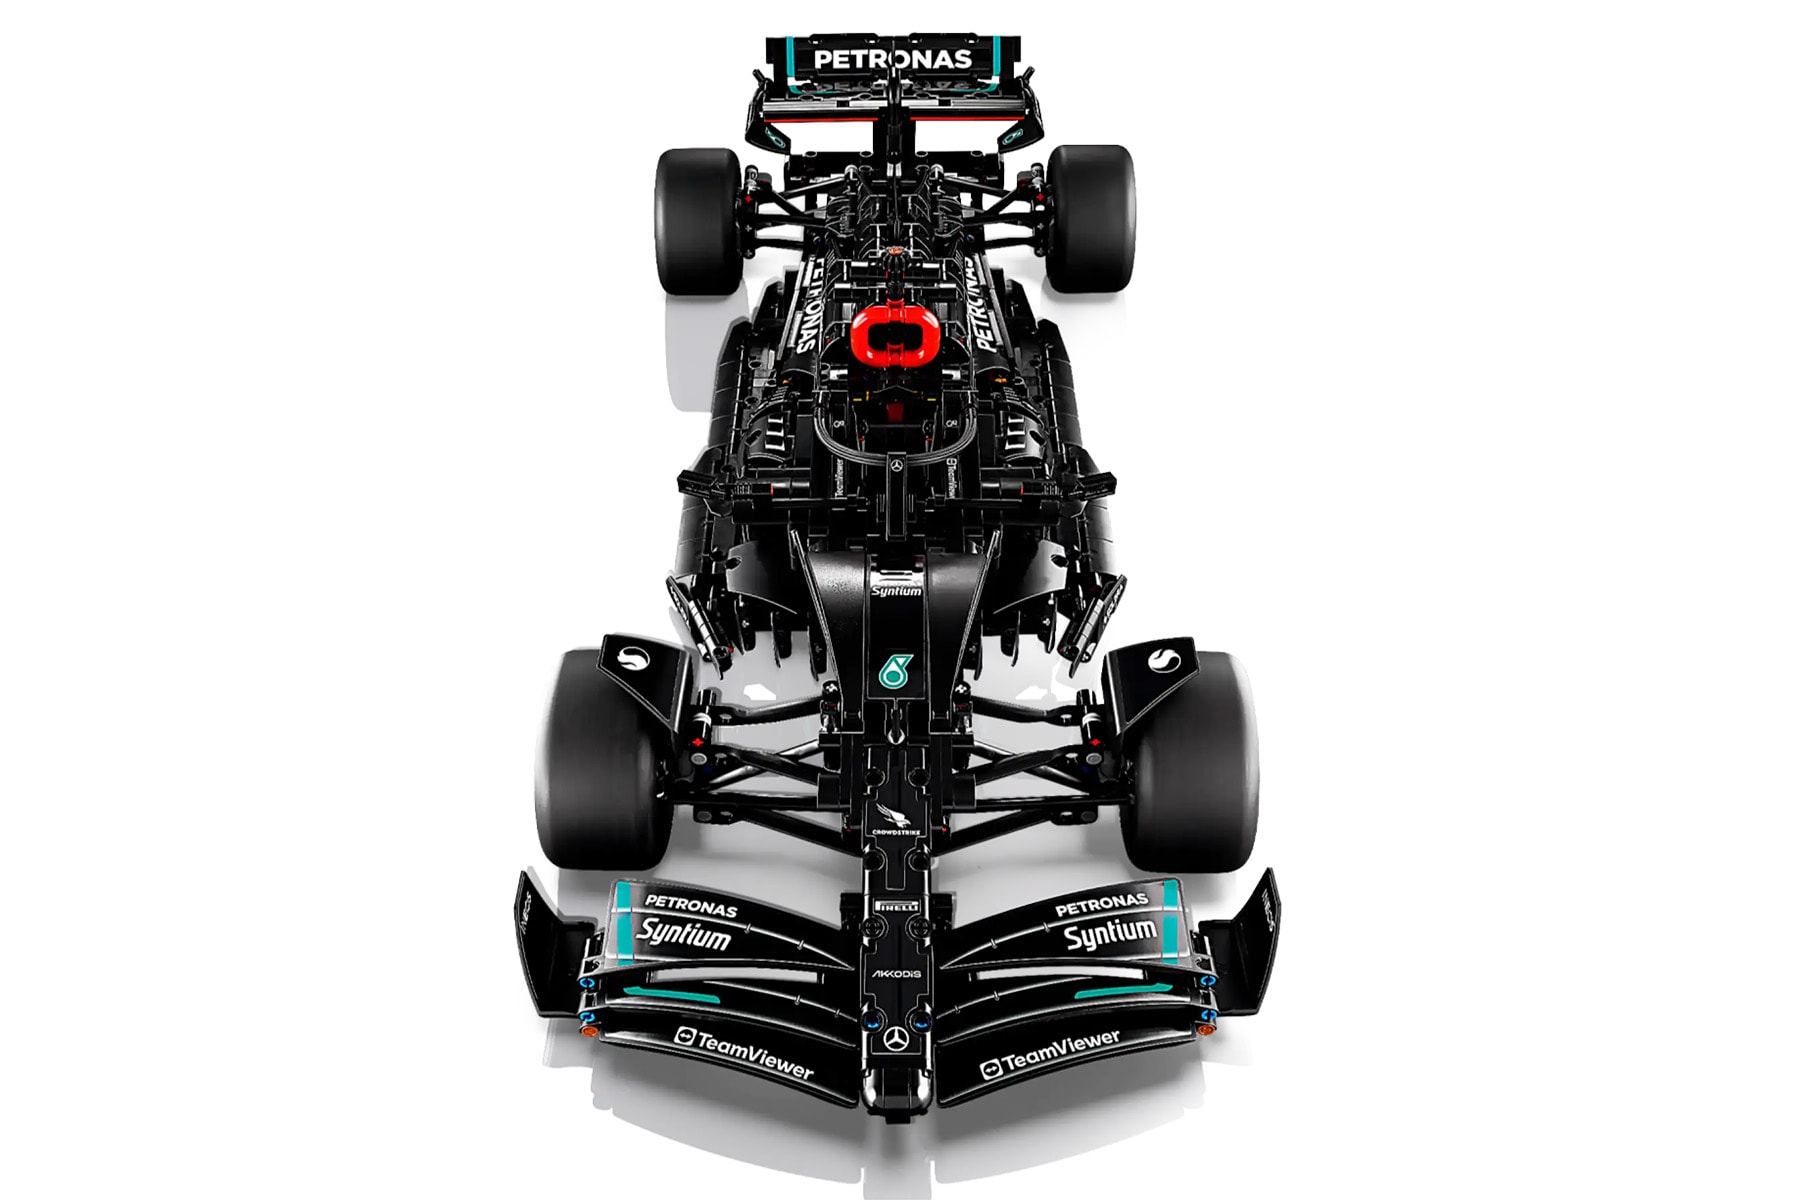 LEGO Technic 推出全新 1:8 尺寸 Mercedes-AMG F1 賽車積木模型